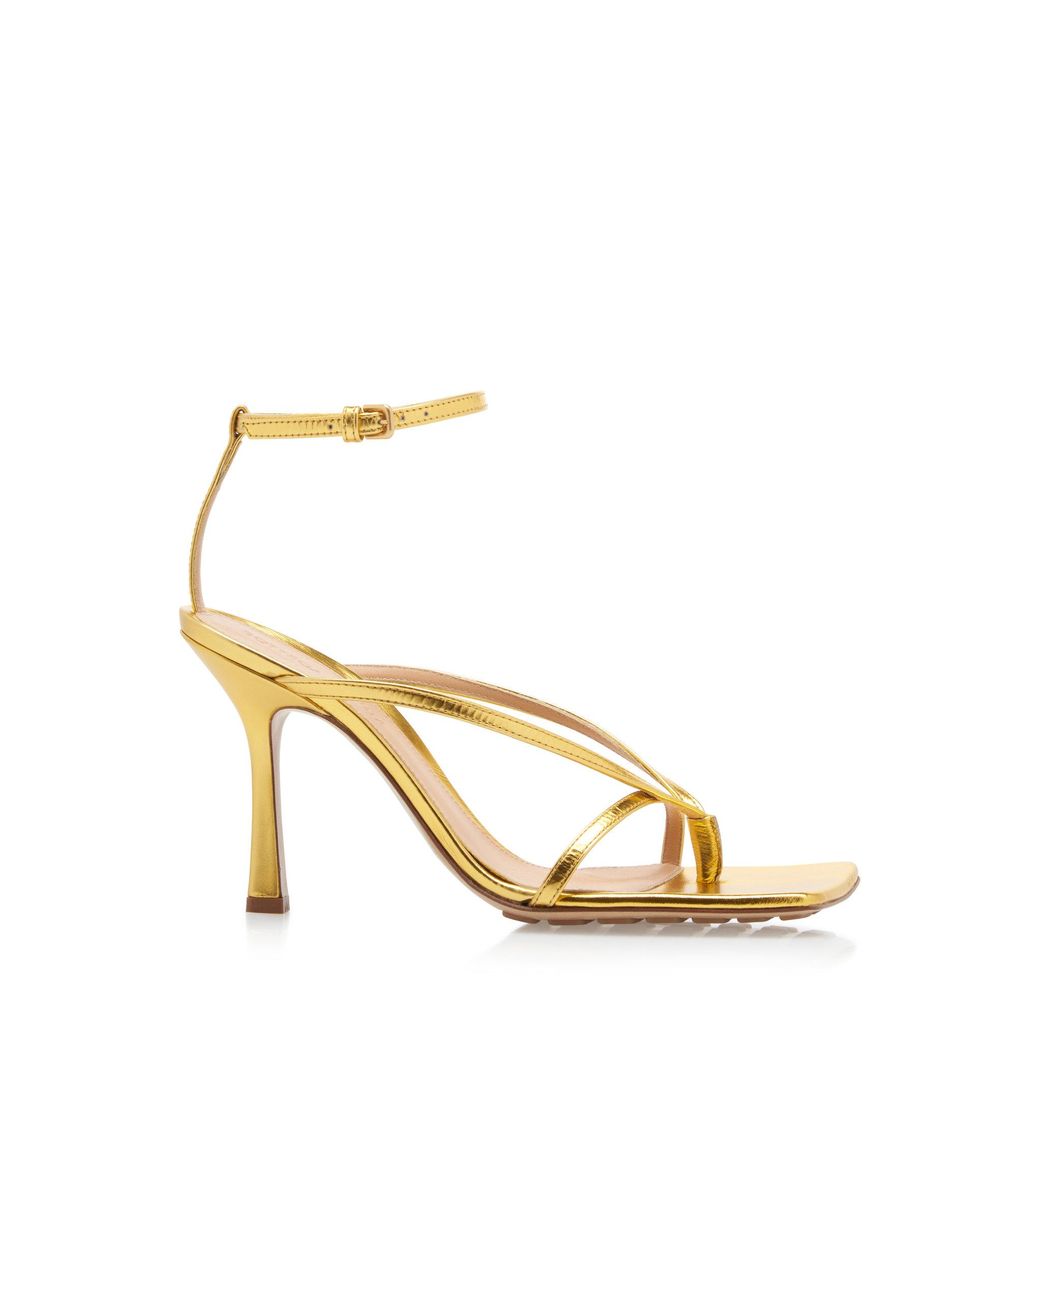 Bottega Veneta Leather Stretch Sandals in Gold (Metallic) - Lyst